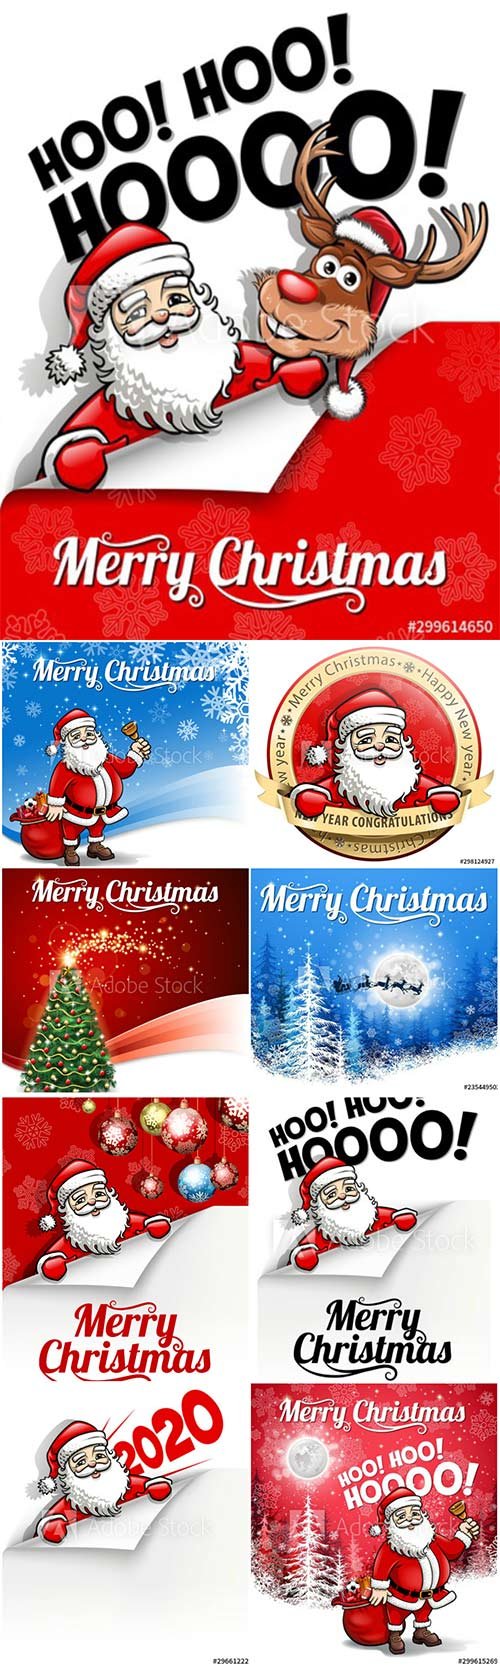 Santa's Christmas snowy greeting, Merry Christmas card